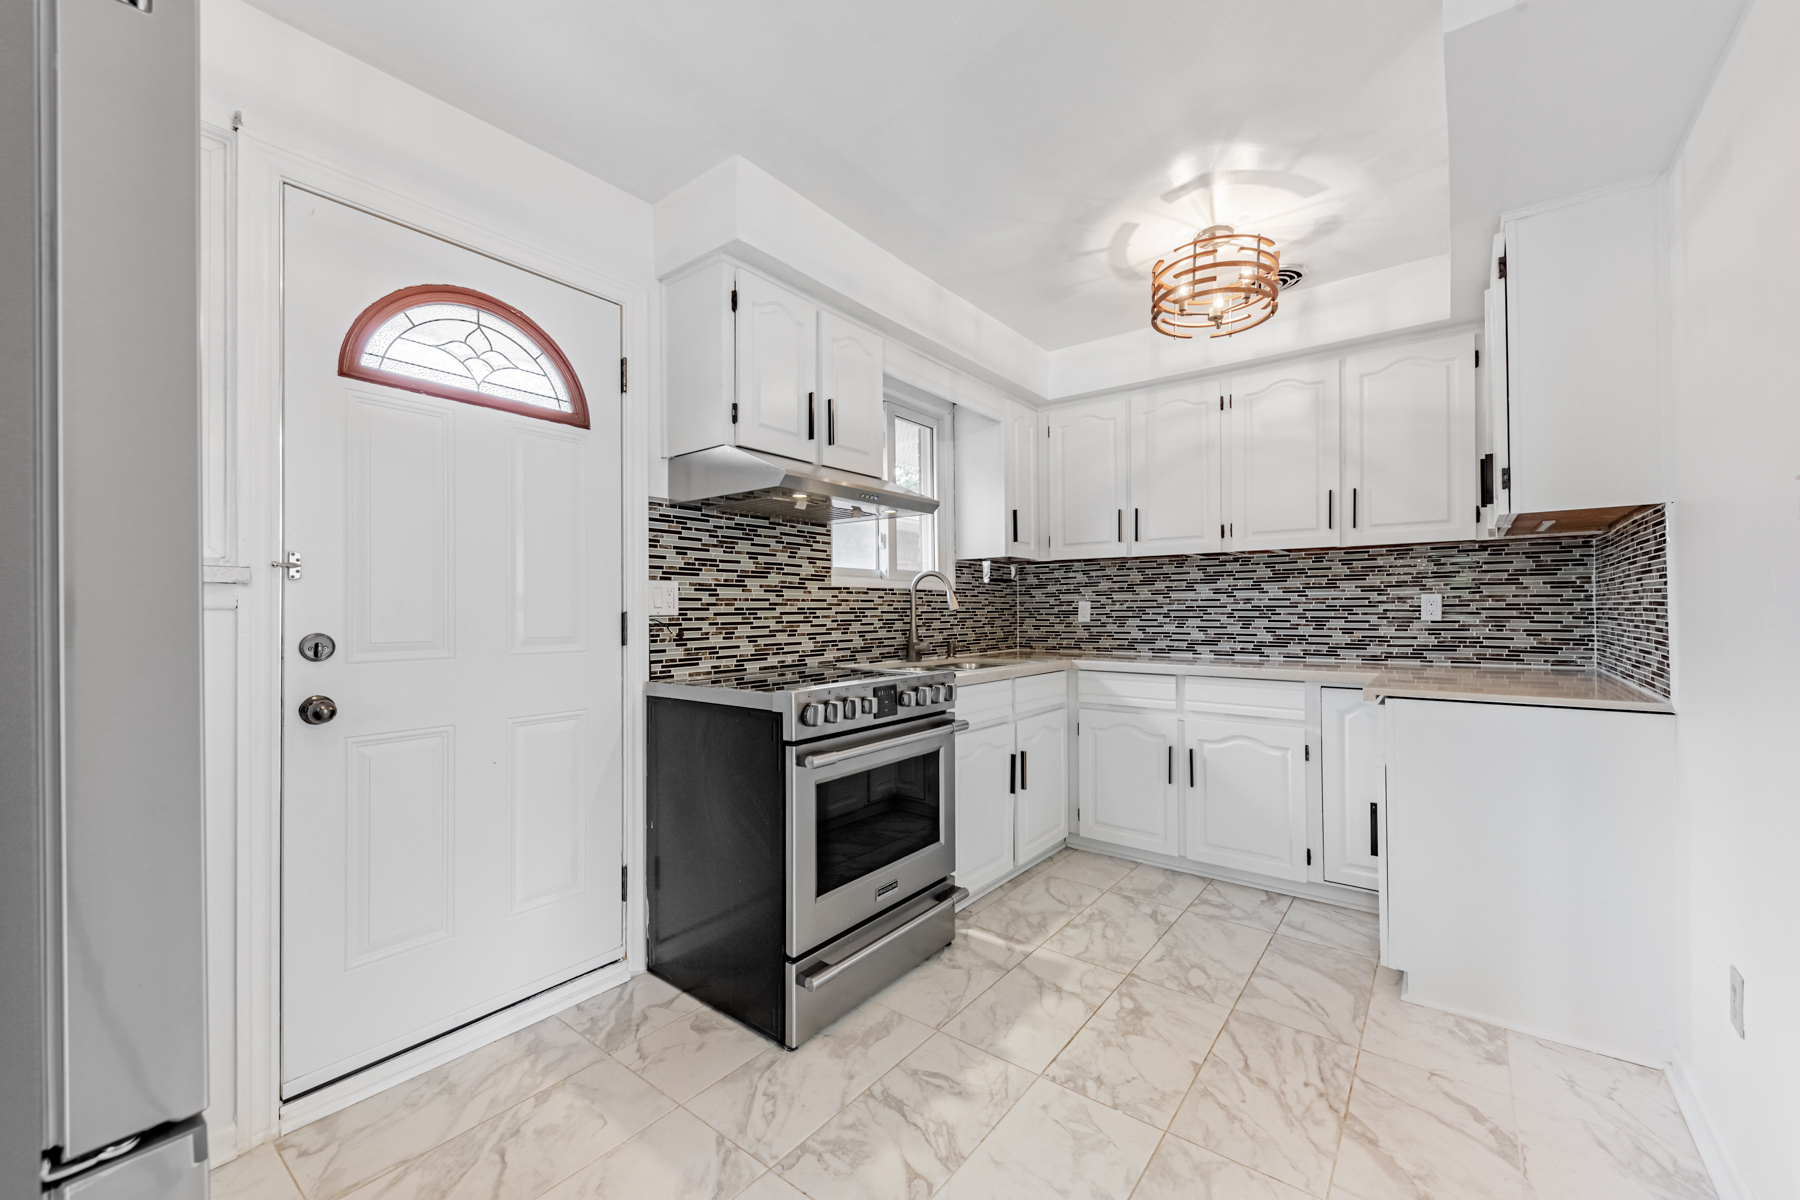 36 Earlton Rd kitchen with porcelain floors, mosaic backsplash, and white cabinets.